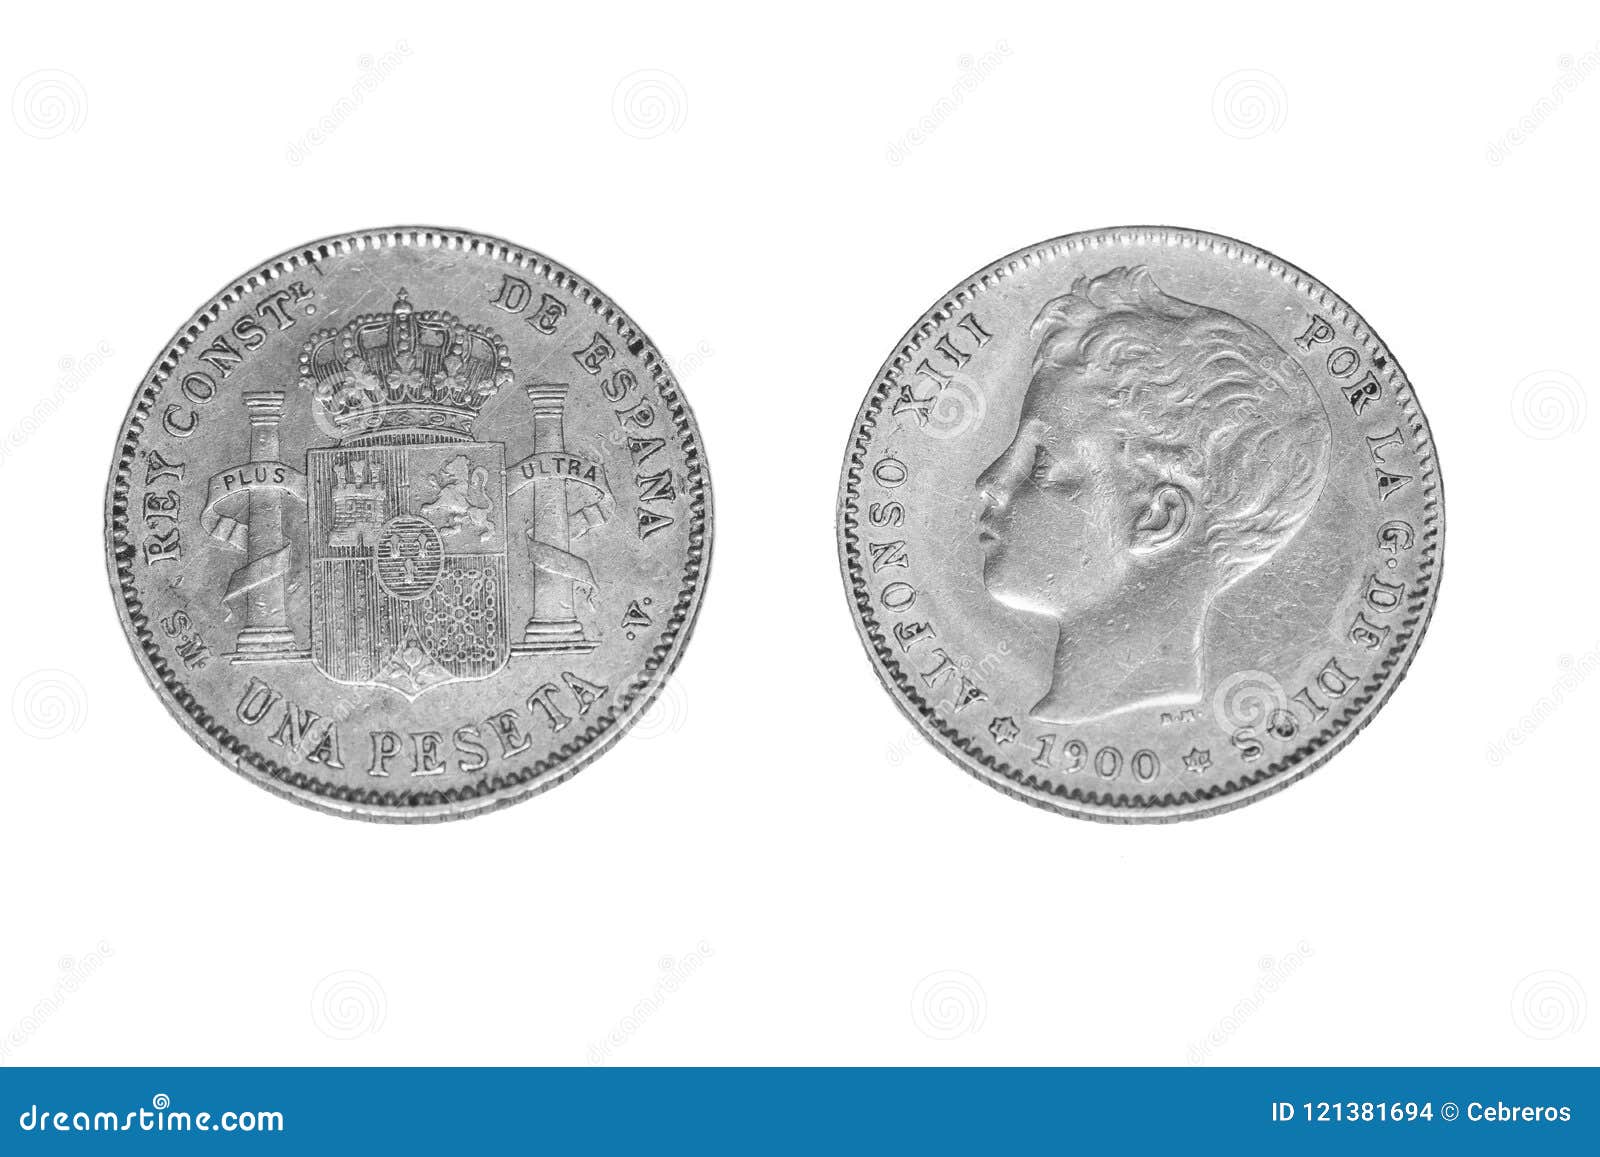  one silver peseta coin of 1900